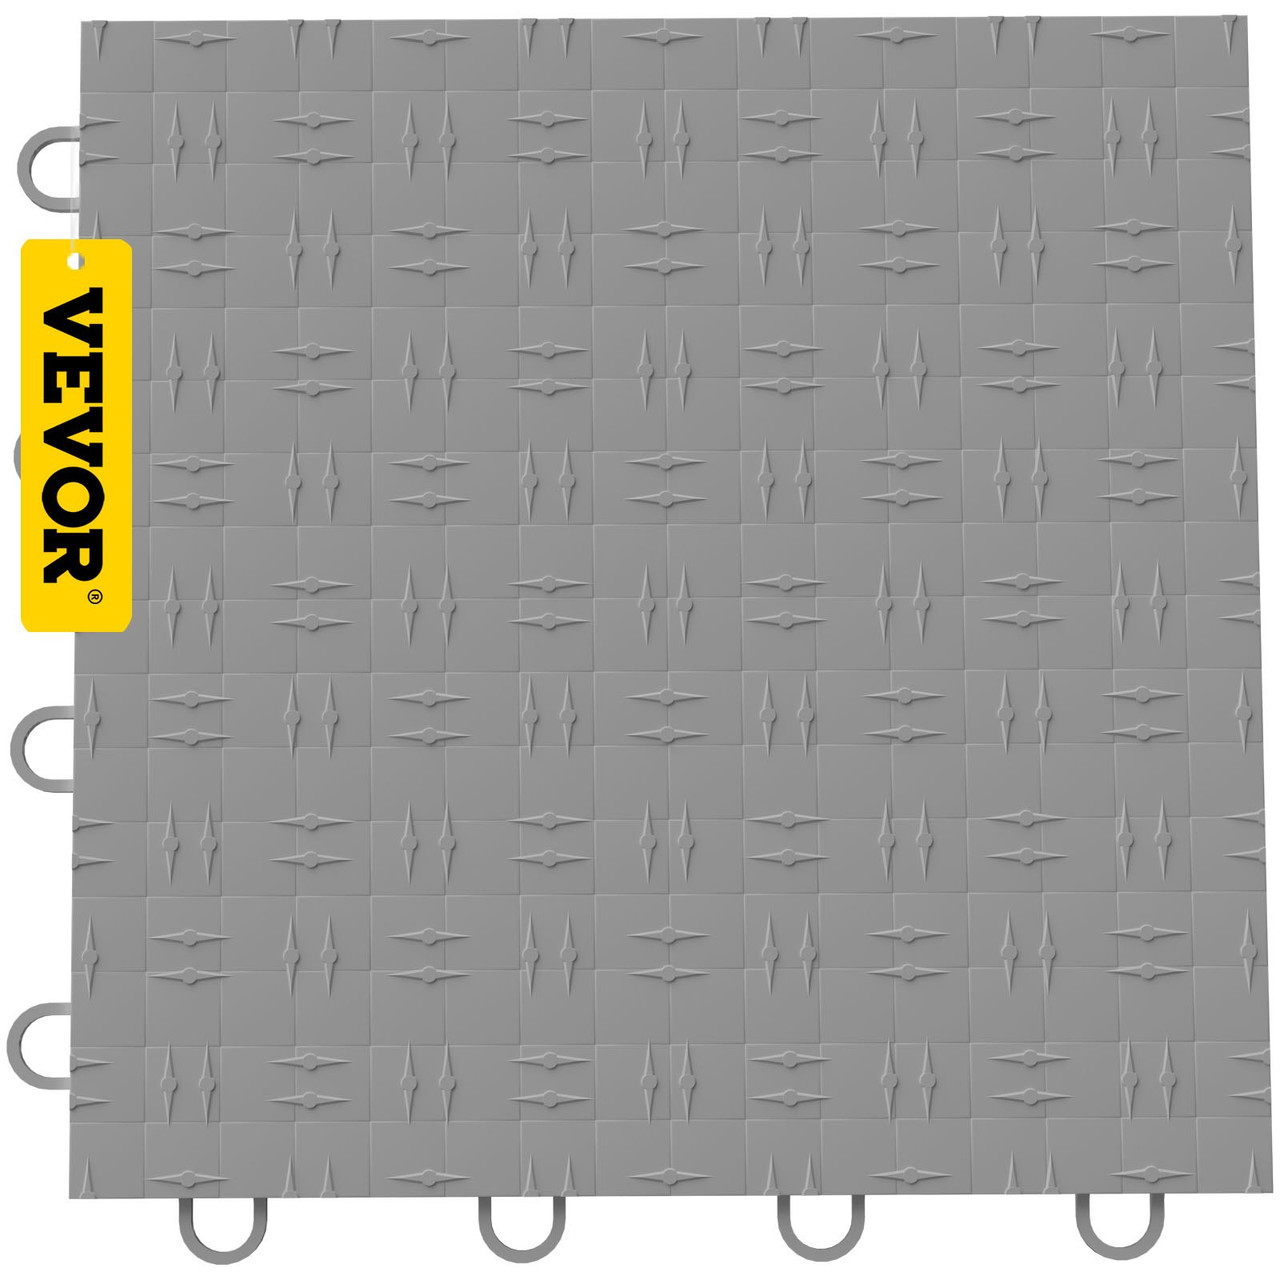 VEVOR Garage Tiles Interlocking, 12'' x 12'', 25 pcs, Silver Garage Floor Covering Tiles, Non-Slip Diamond Plate Garage Flooring Tiles, Support up to 55,000 lbs for Basements, Gyms, Repair Shops